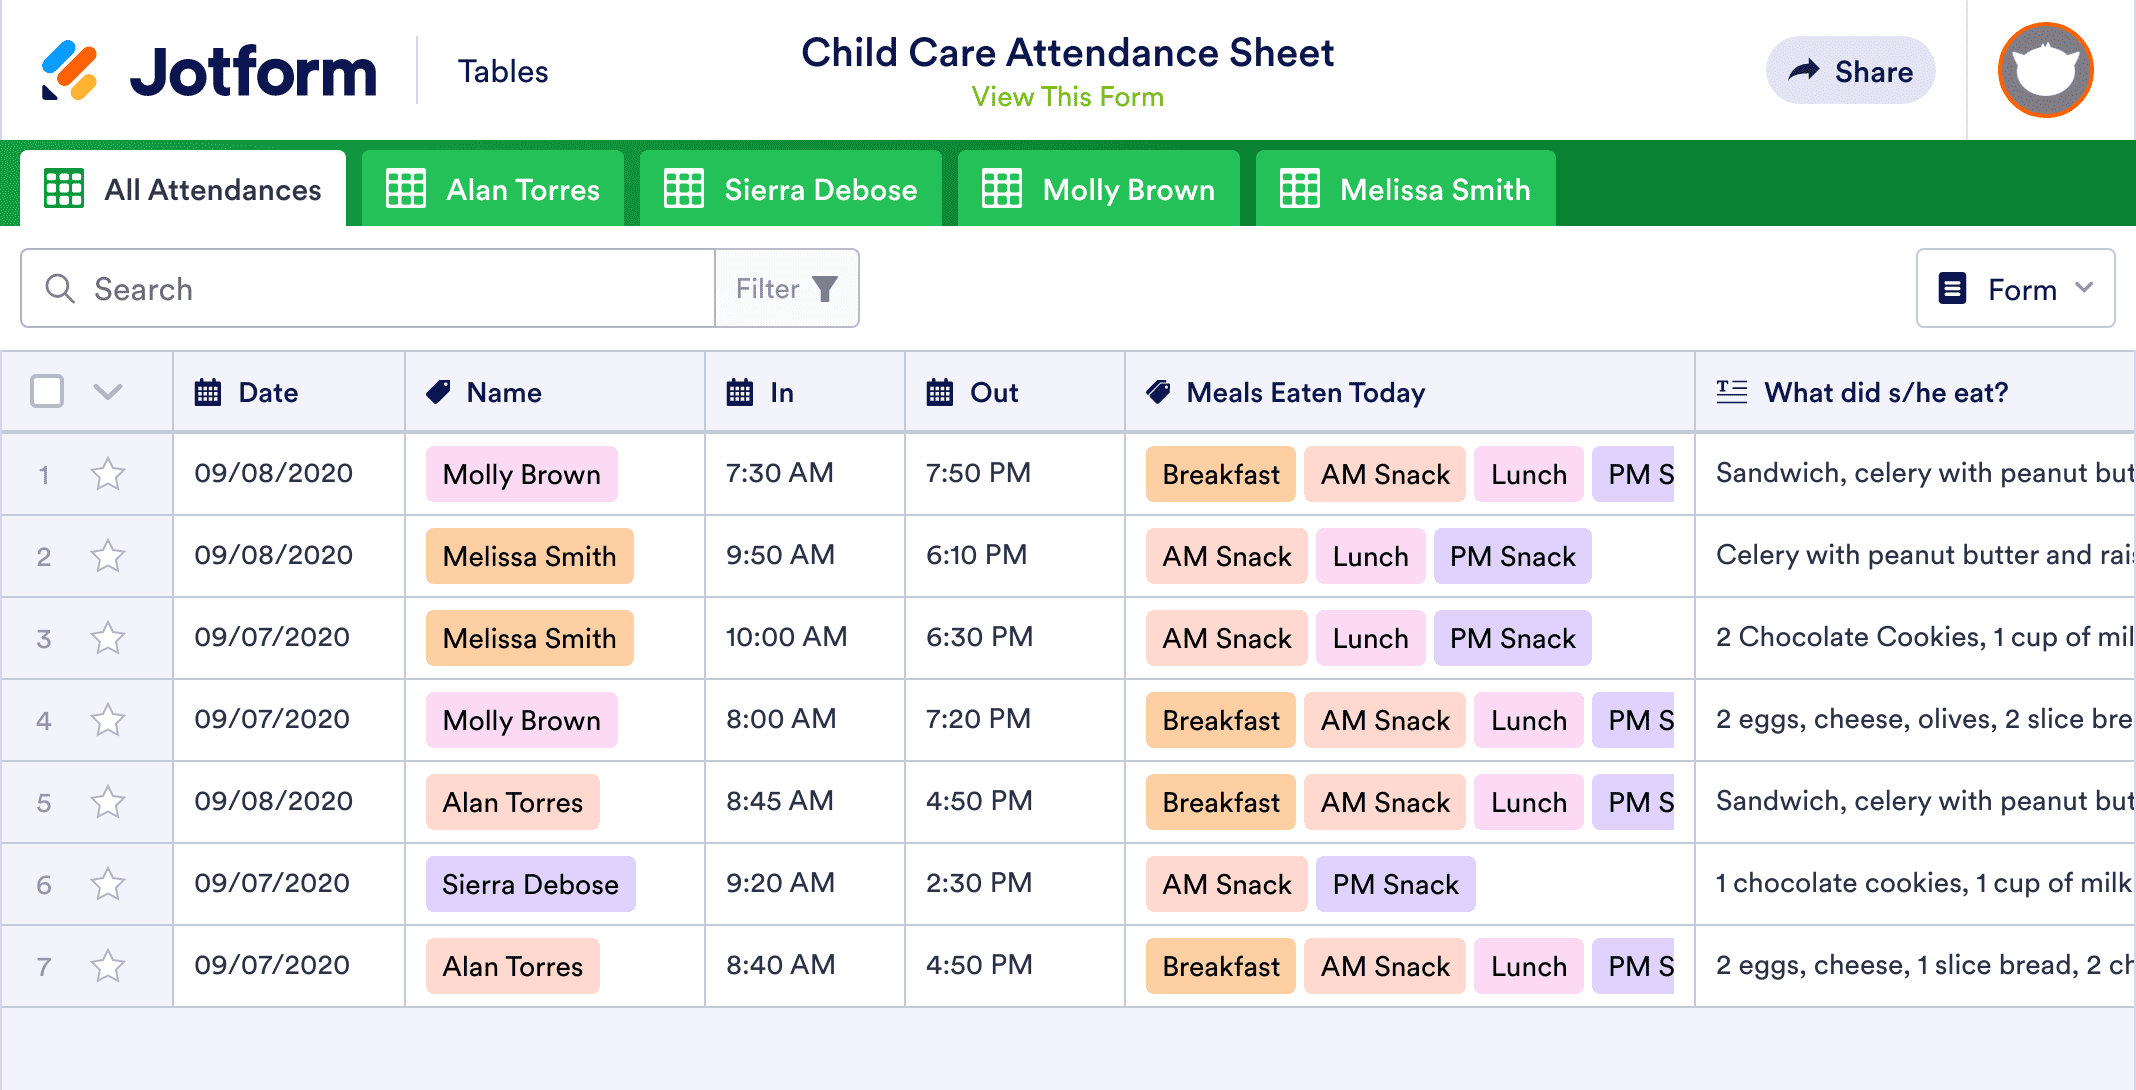 Child Care Attendance Sheet